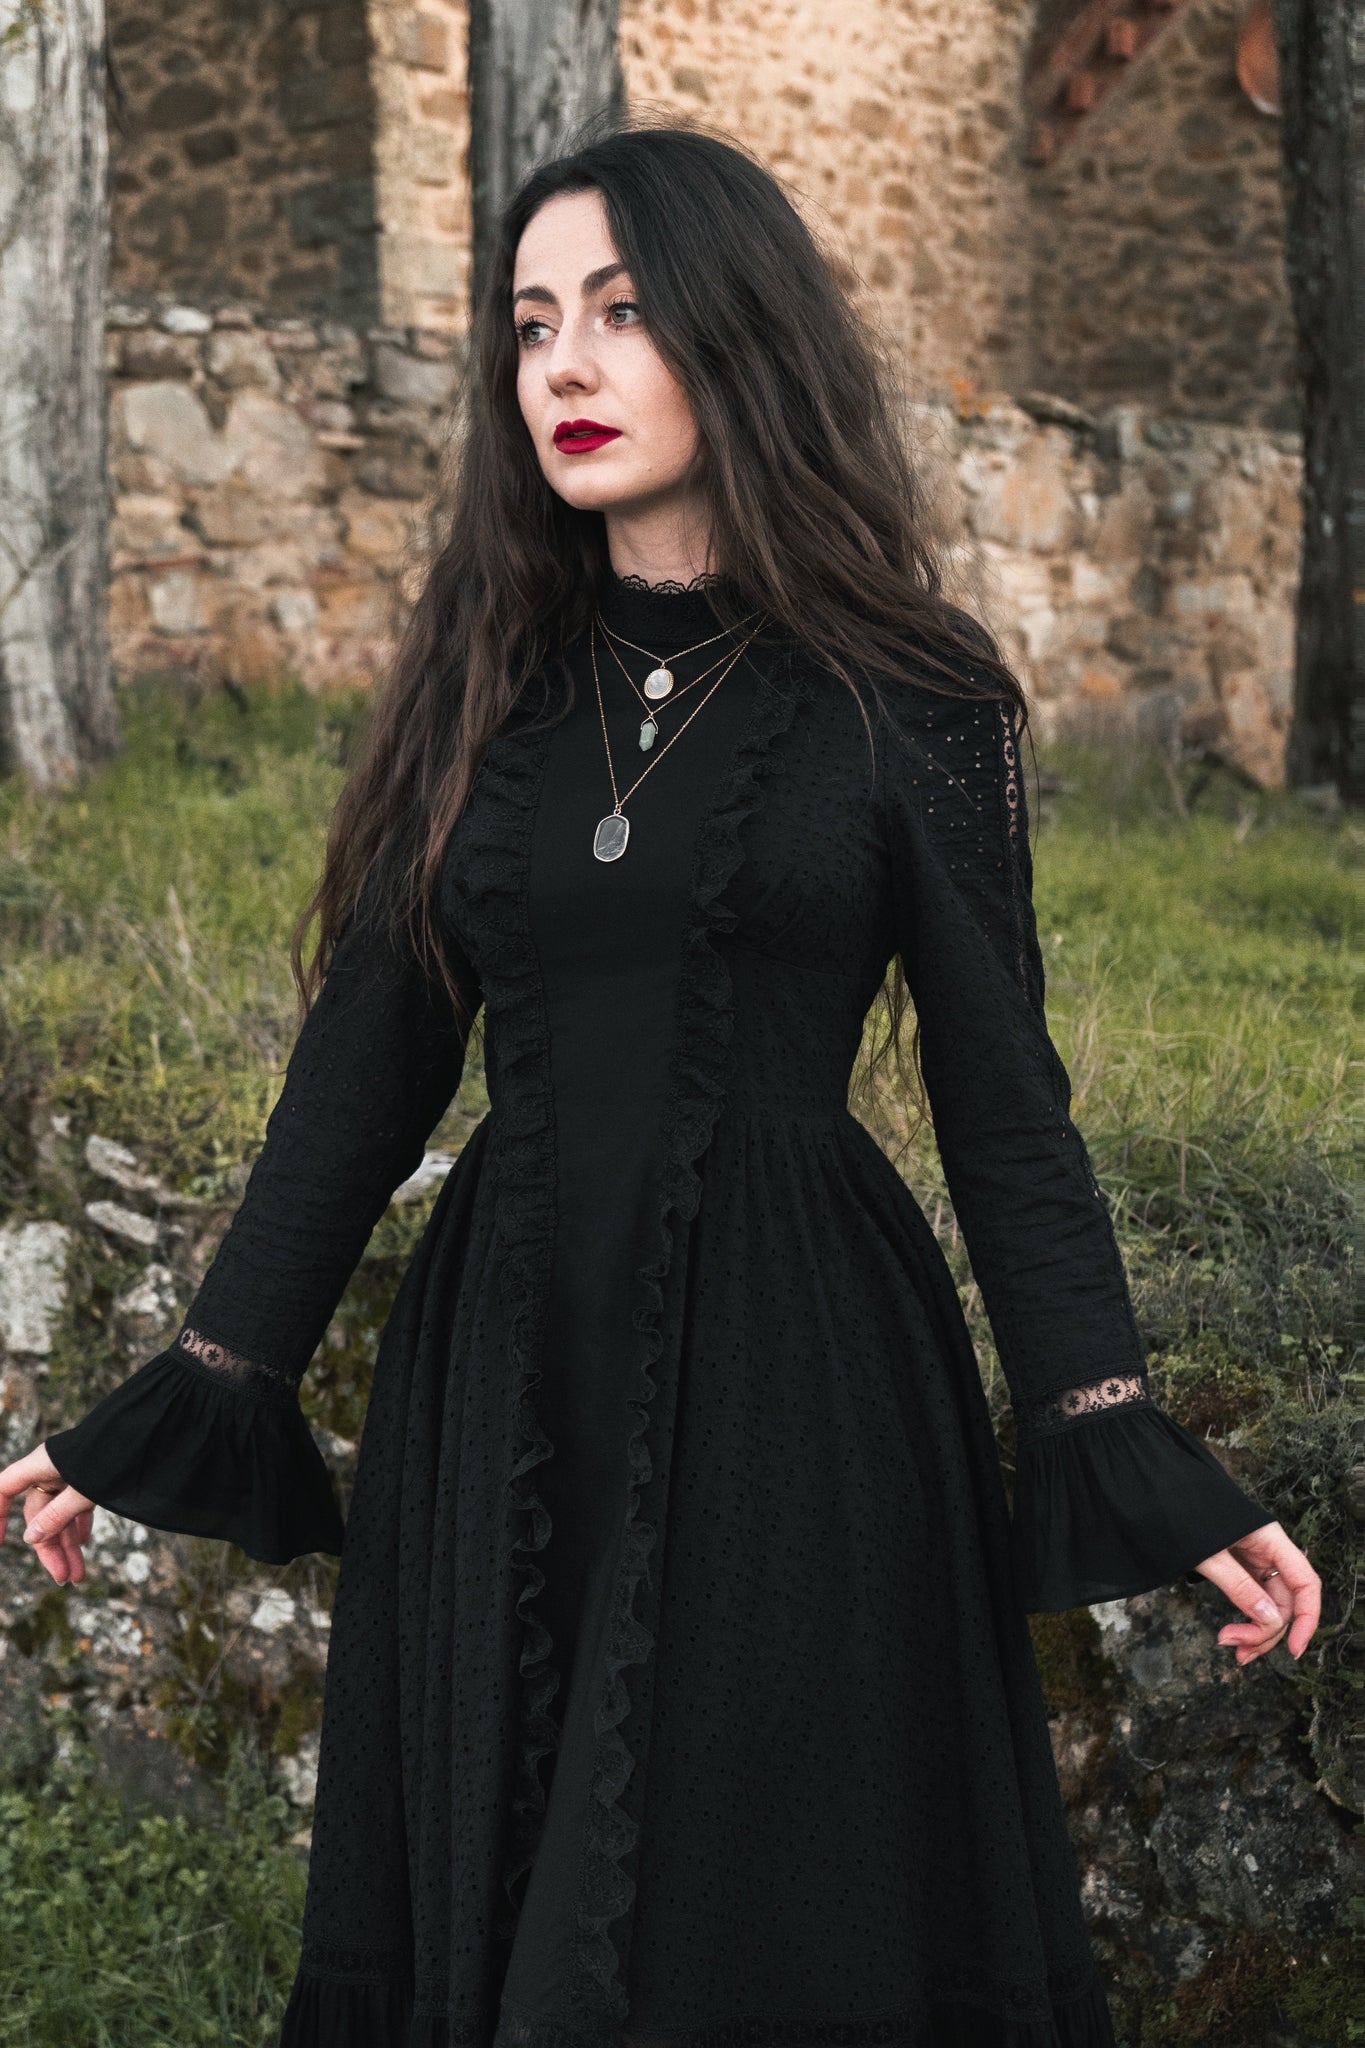 Witch vibe girl in black maxi boho dress 